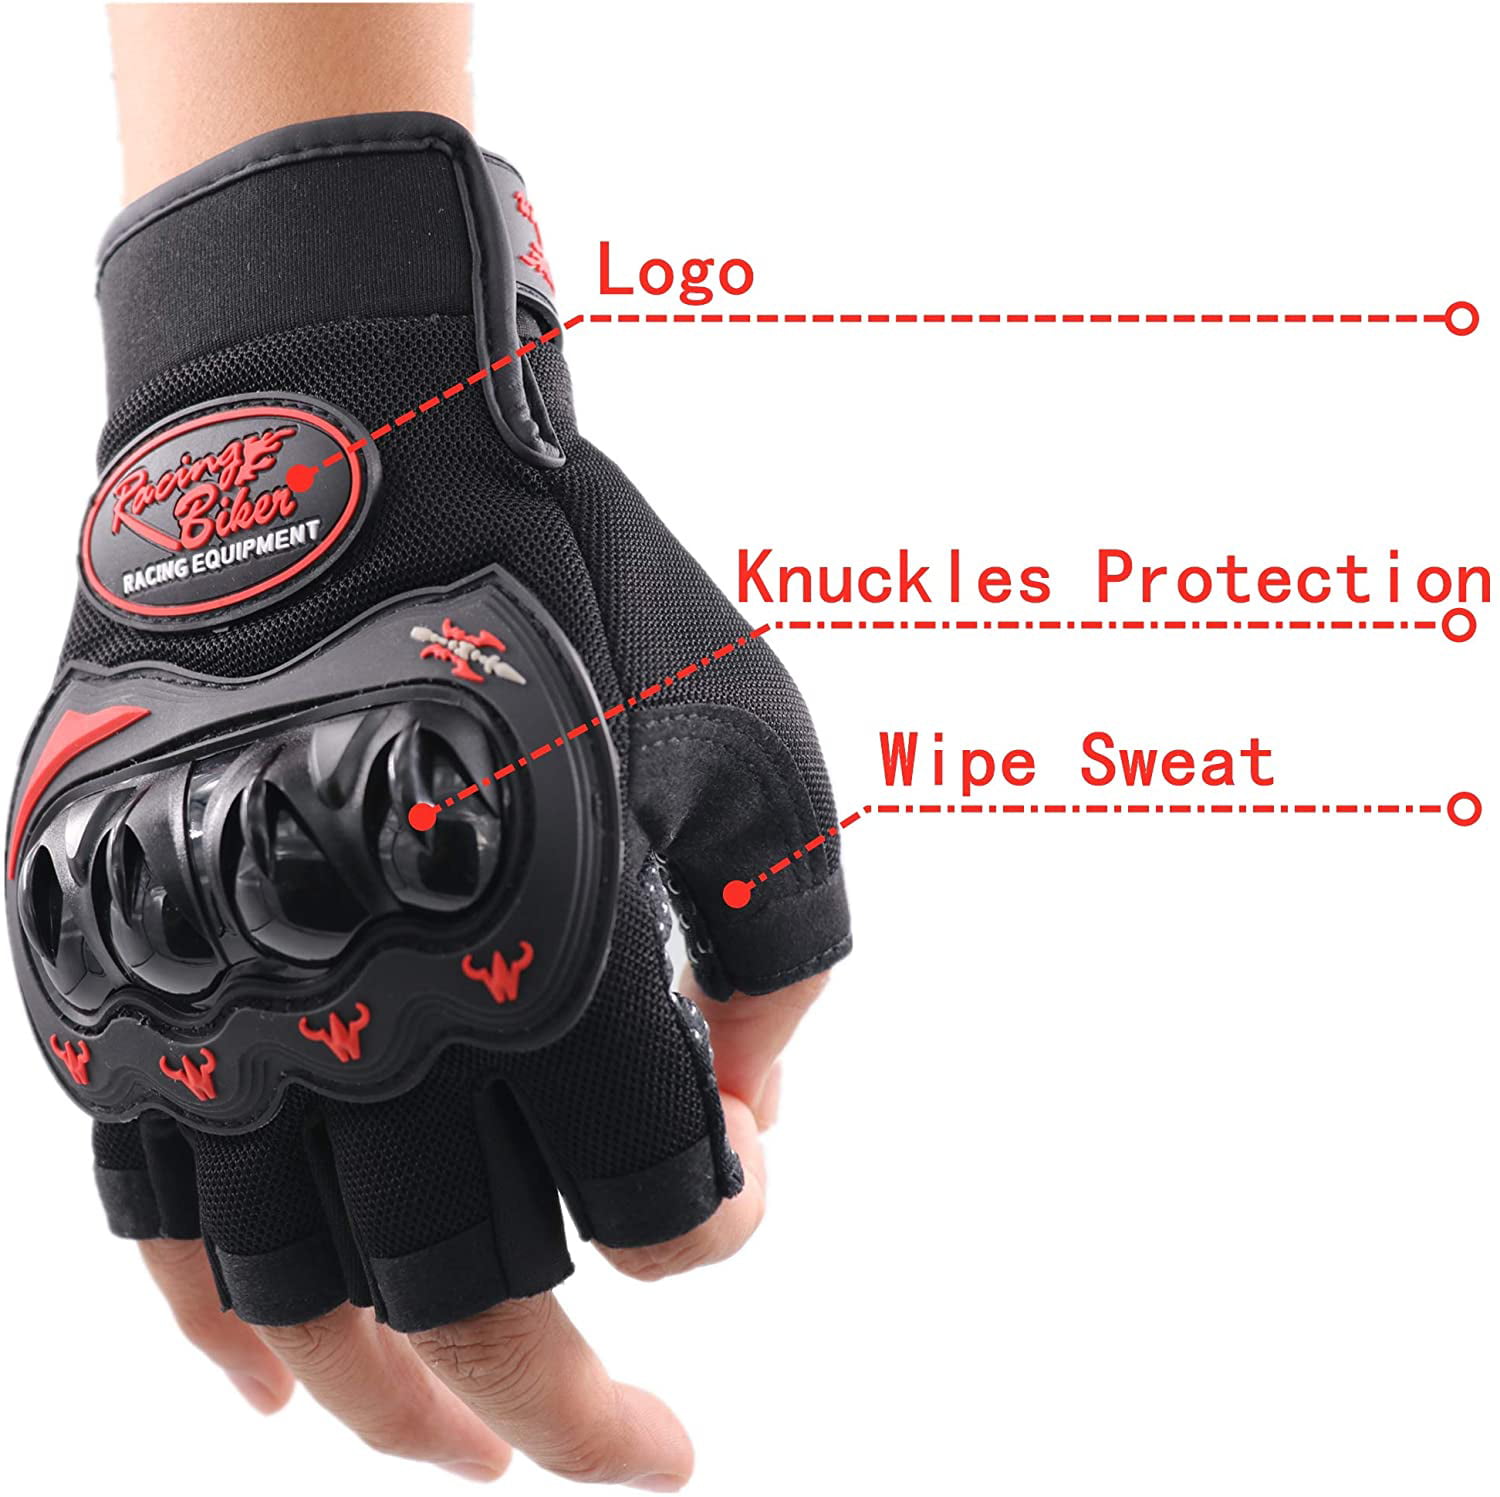 Mountain Bike Gloves with Knuckle Protection Function for Men Women Youth Kids OUMATR Dirt Bike Gloves BMX MX ATV MTB Gloves Professional Half Finger Design Safe Comfortable